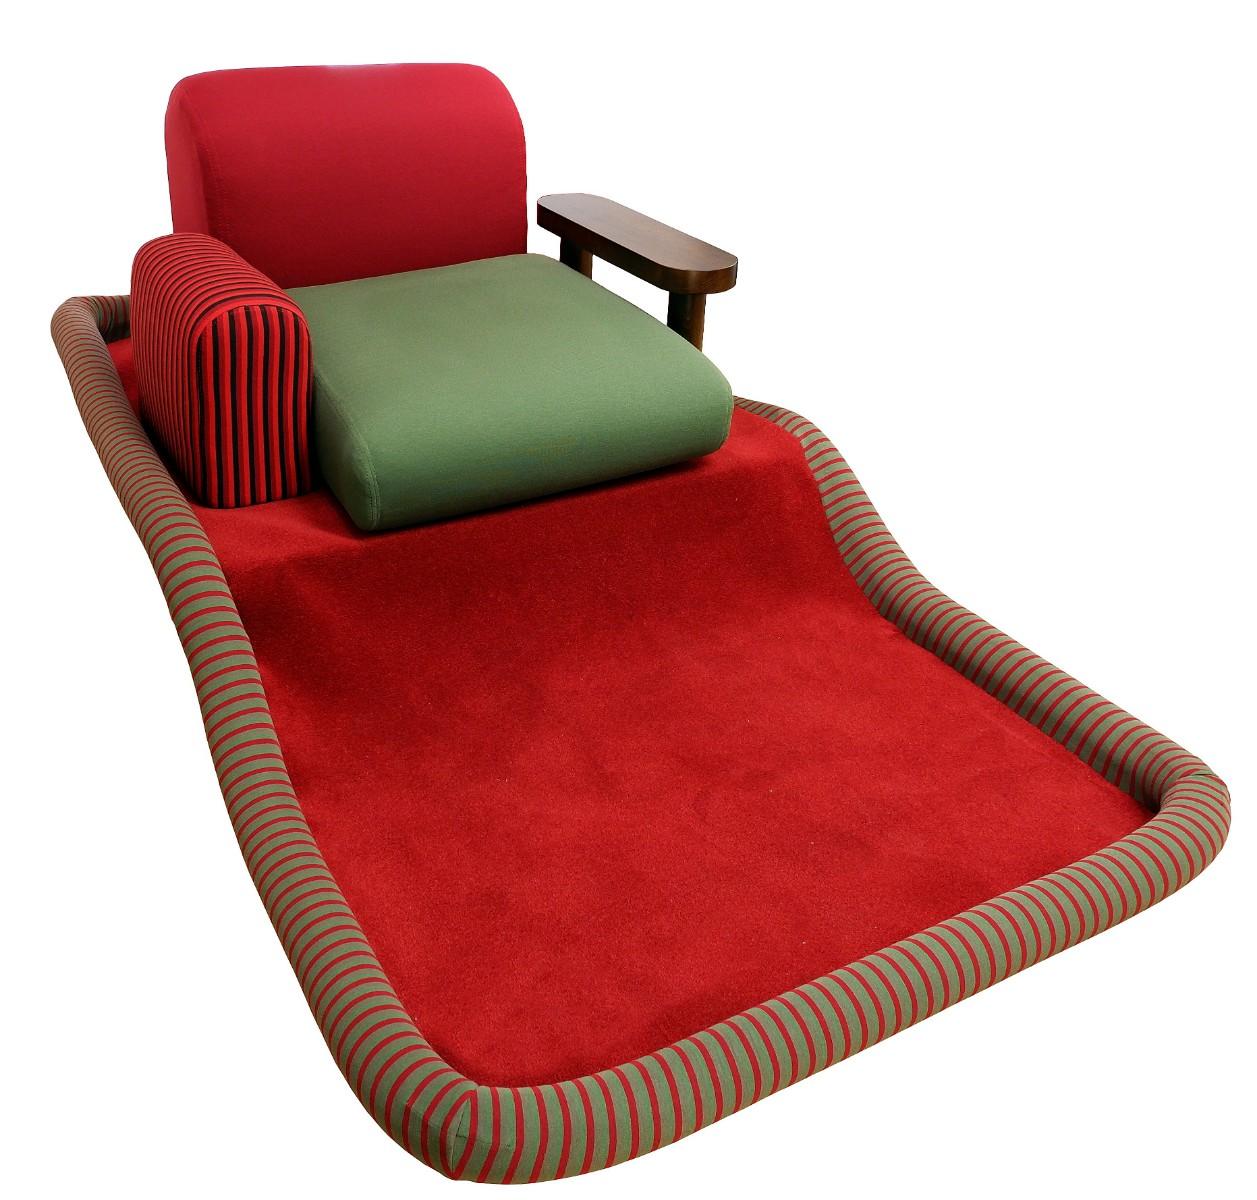 Ettore Sottsass “Tappeto Volante” armchair for Bedding Brevetti, Italy, 1974.